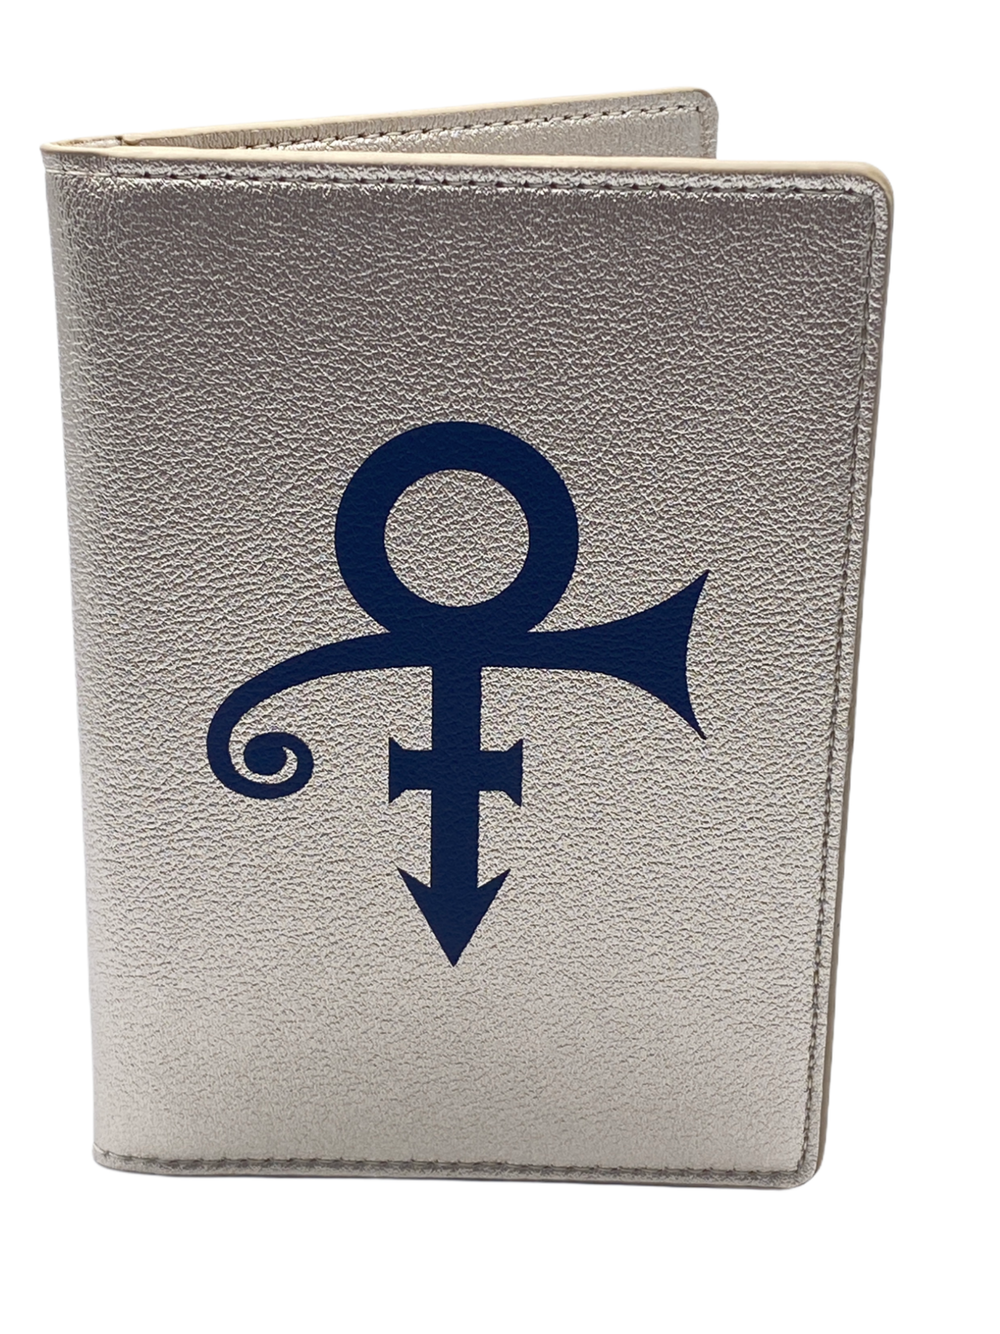 Prince – Official Merchandise Gold Passport Holder Black Love Symbol Brand New